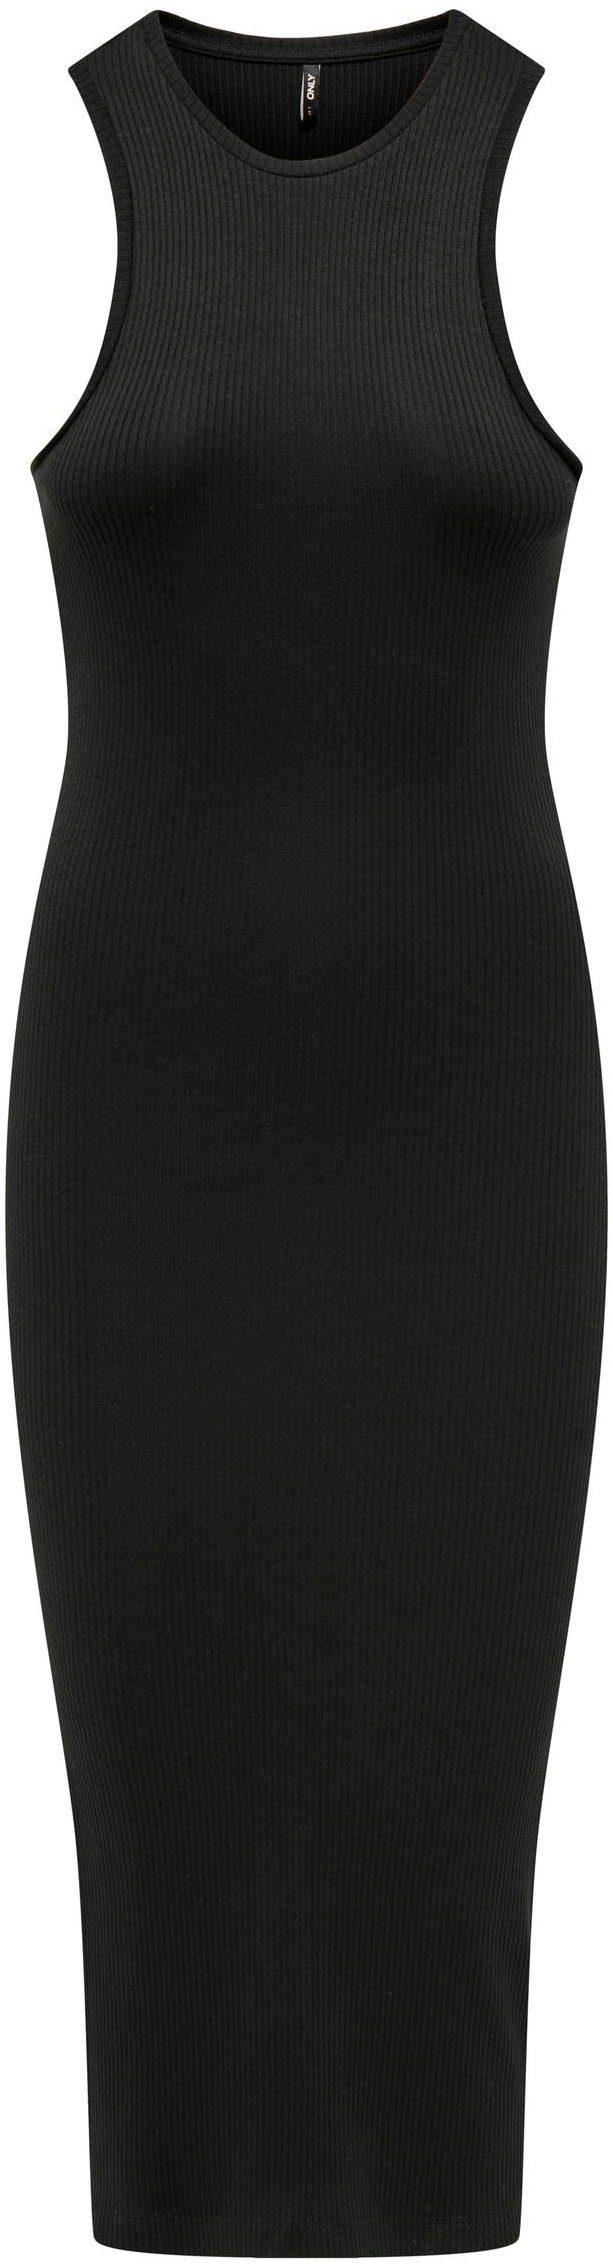 NOOS DRESS JRS ONLBELFAST Black ONLY Jerseykleid S/L MIDI